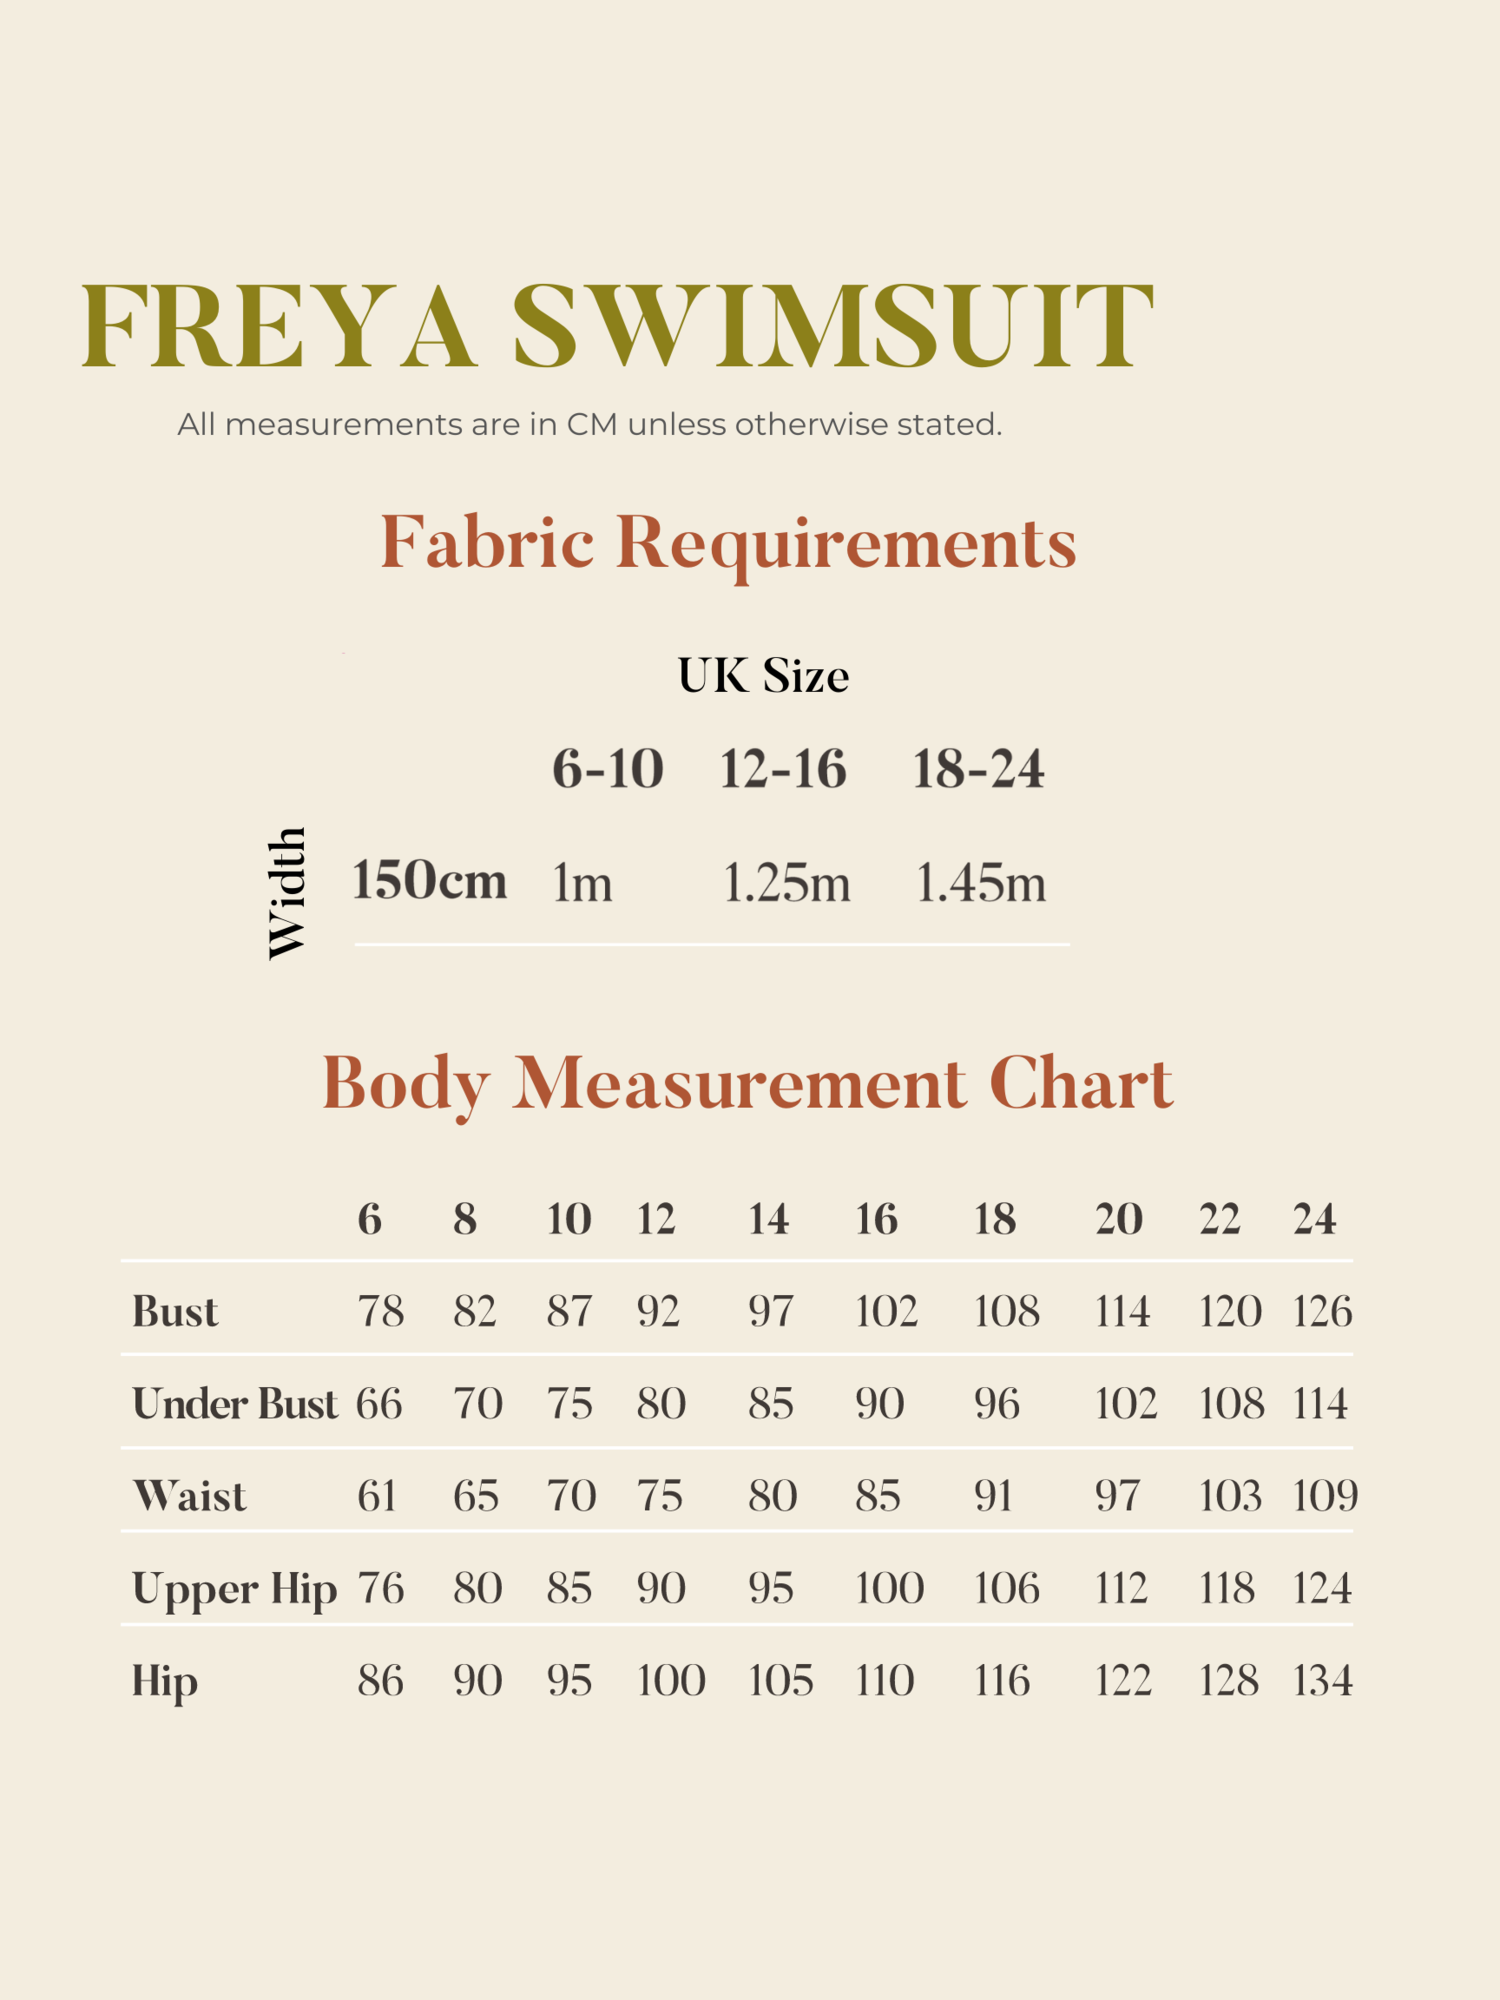 Made My Wardrobe Freya Swimsuit